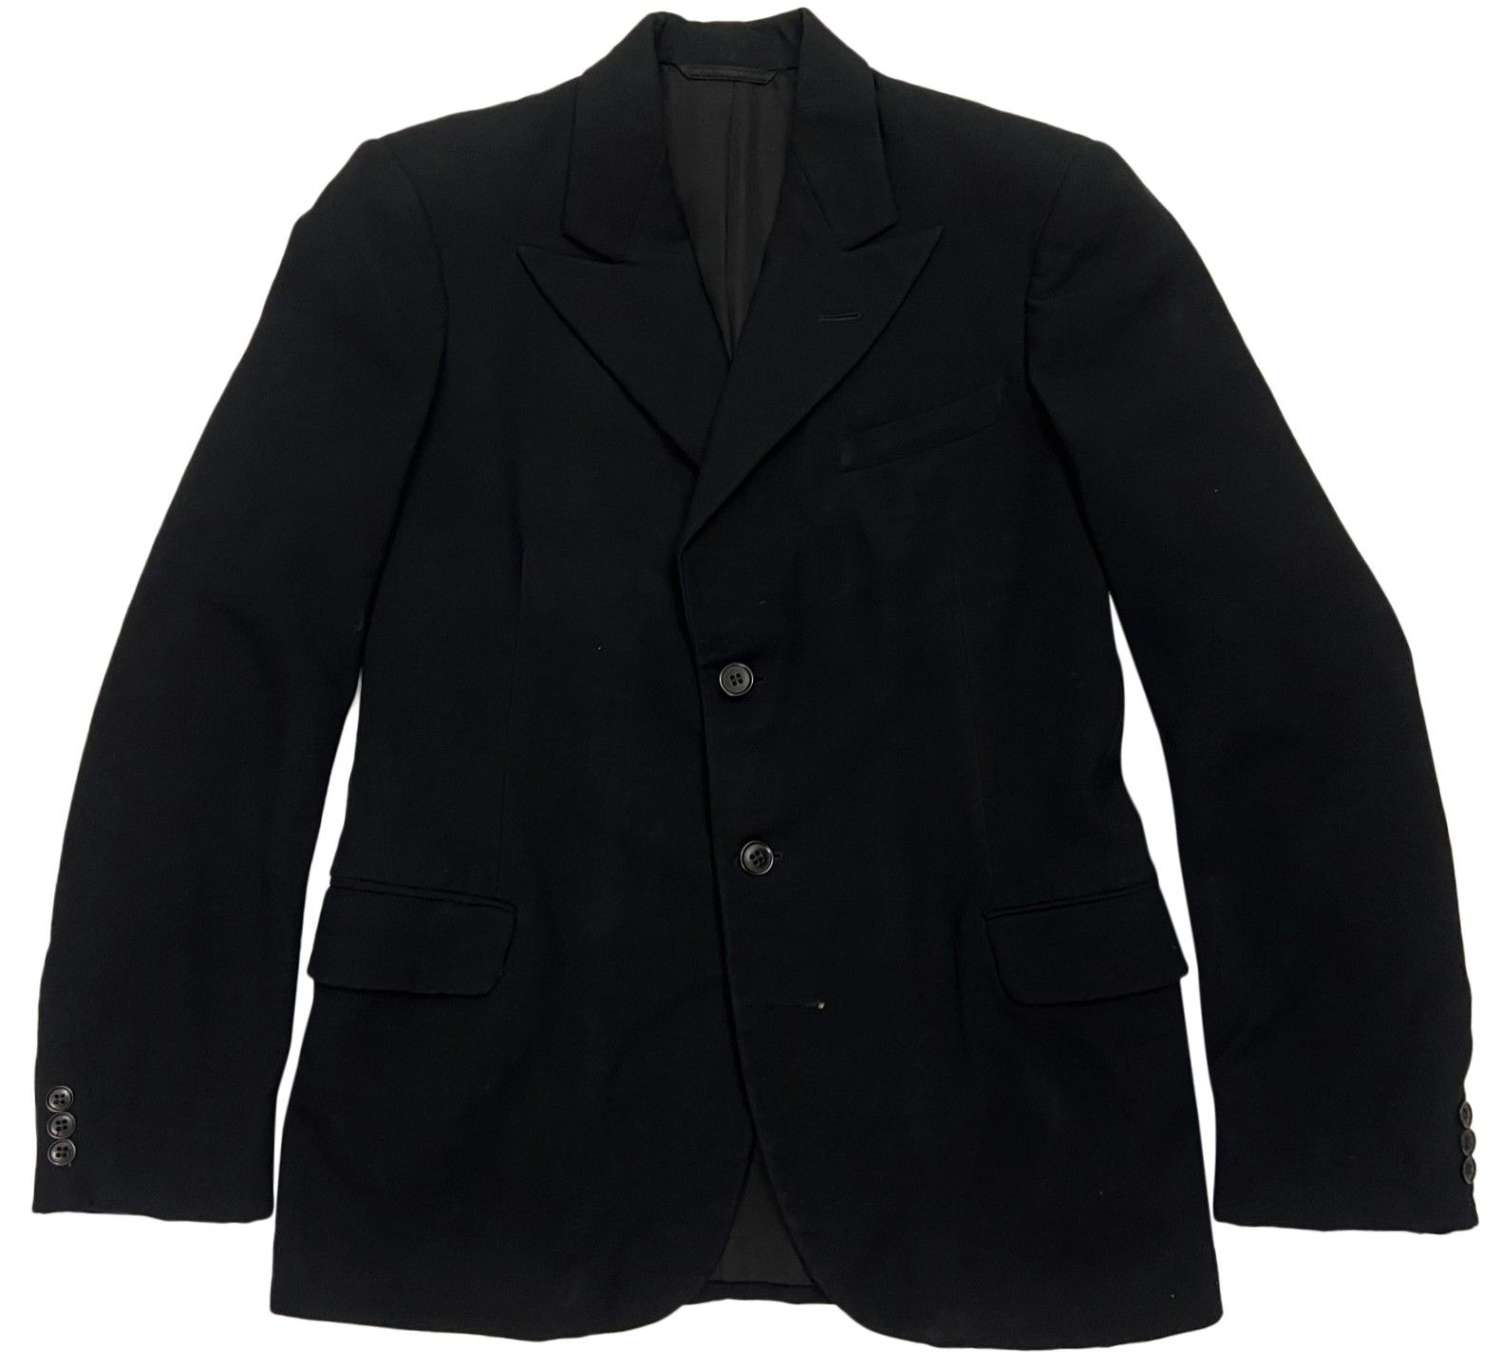 Original 1930s Black Two Button Jacket by 'Burton'